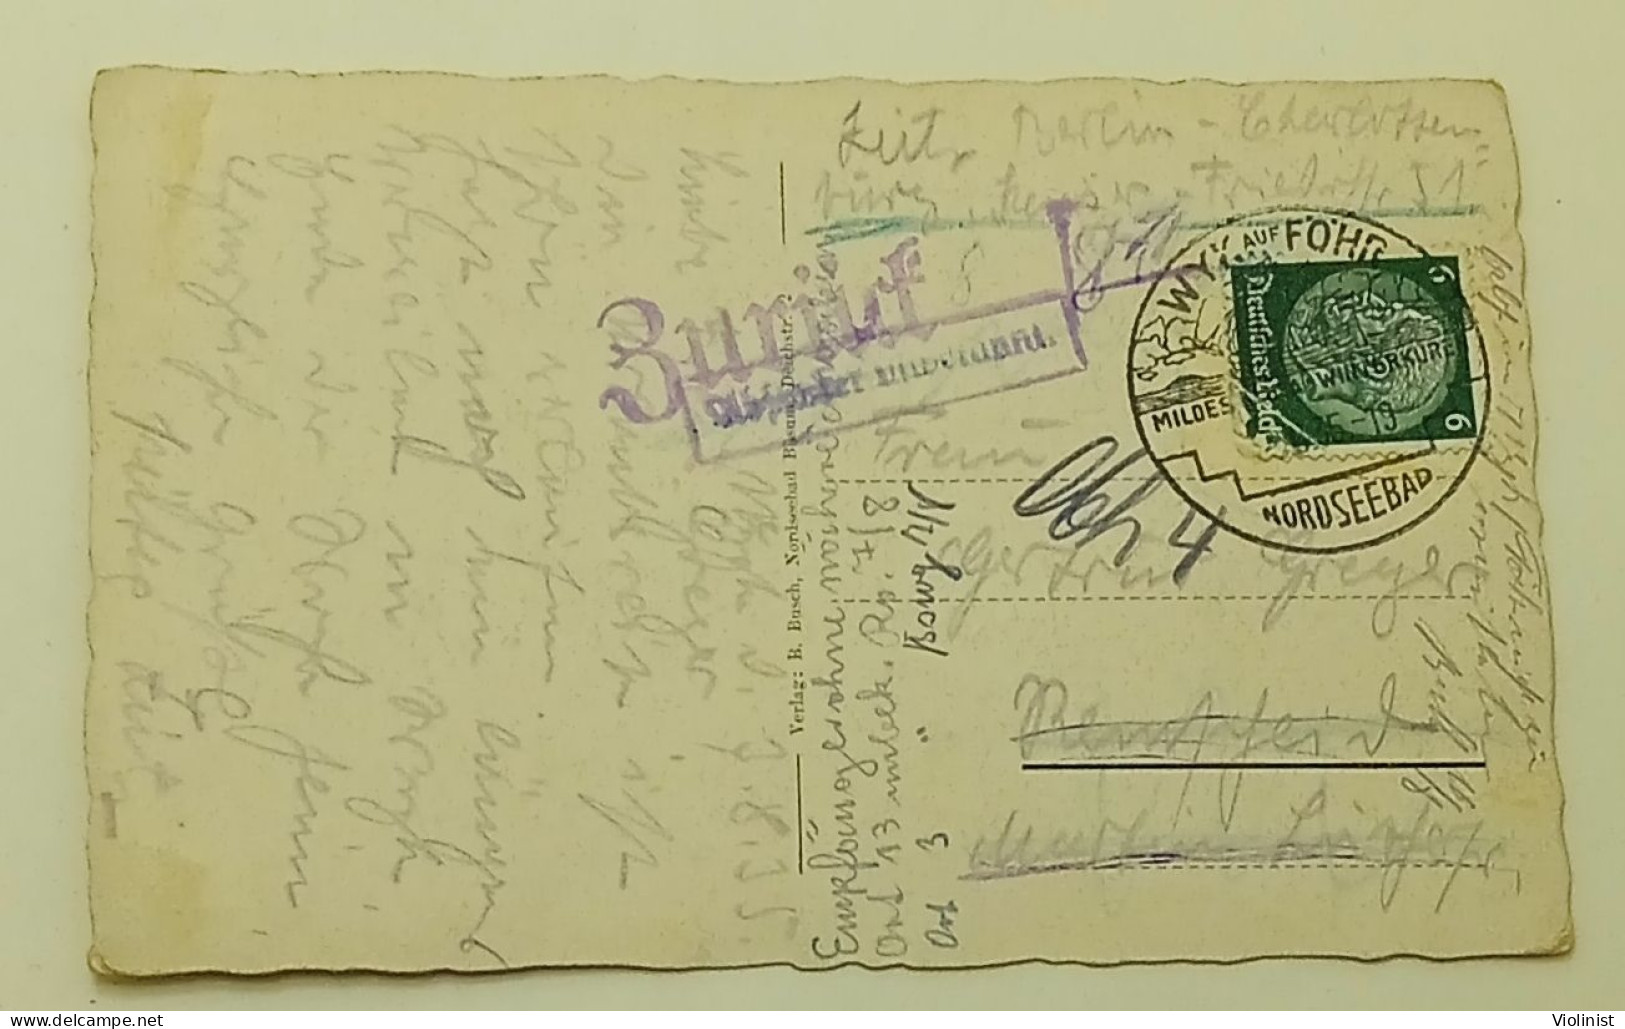 Germany-Nordseebad Büsum-Postmark Wyk auf Föhr 1935.